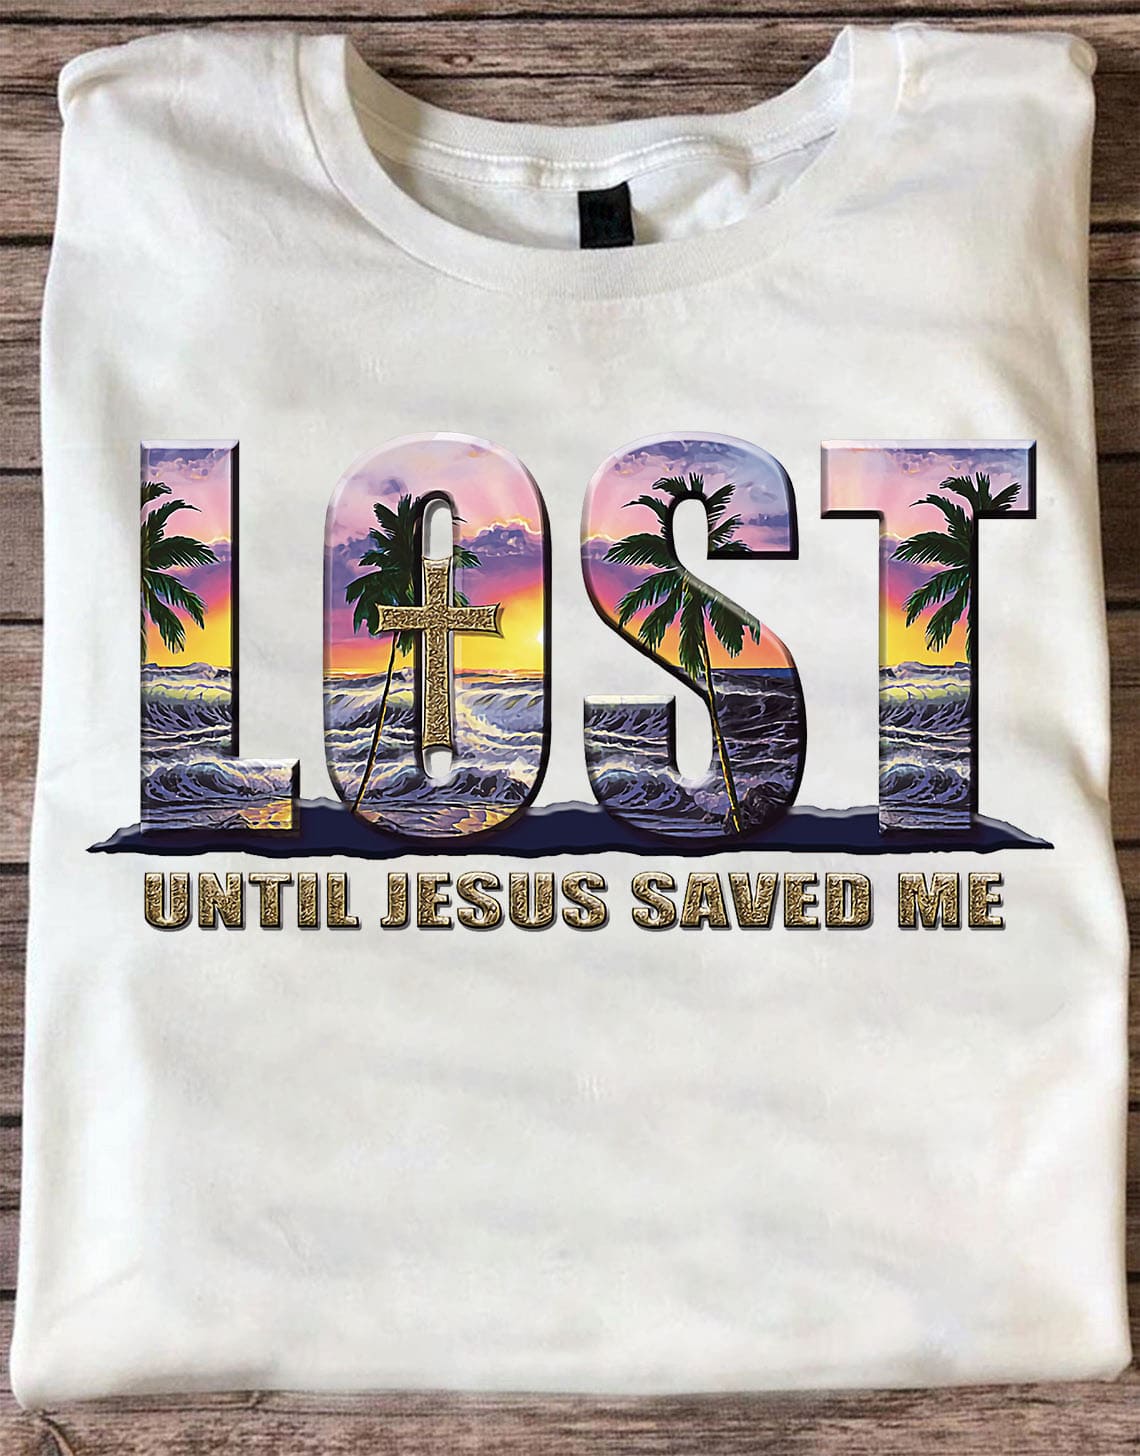 jesus saved me